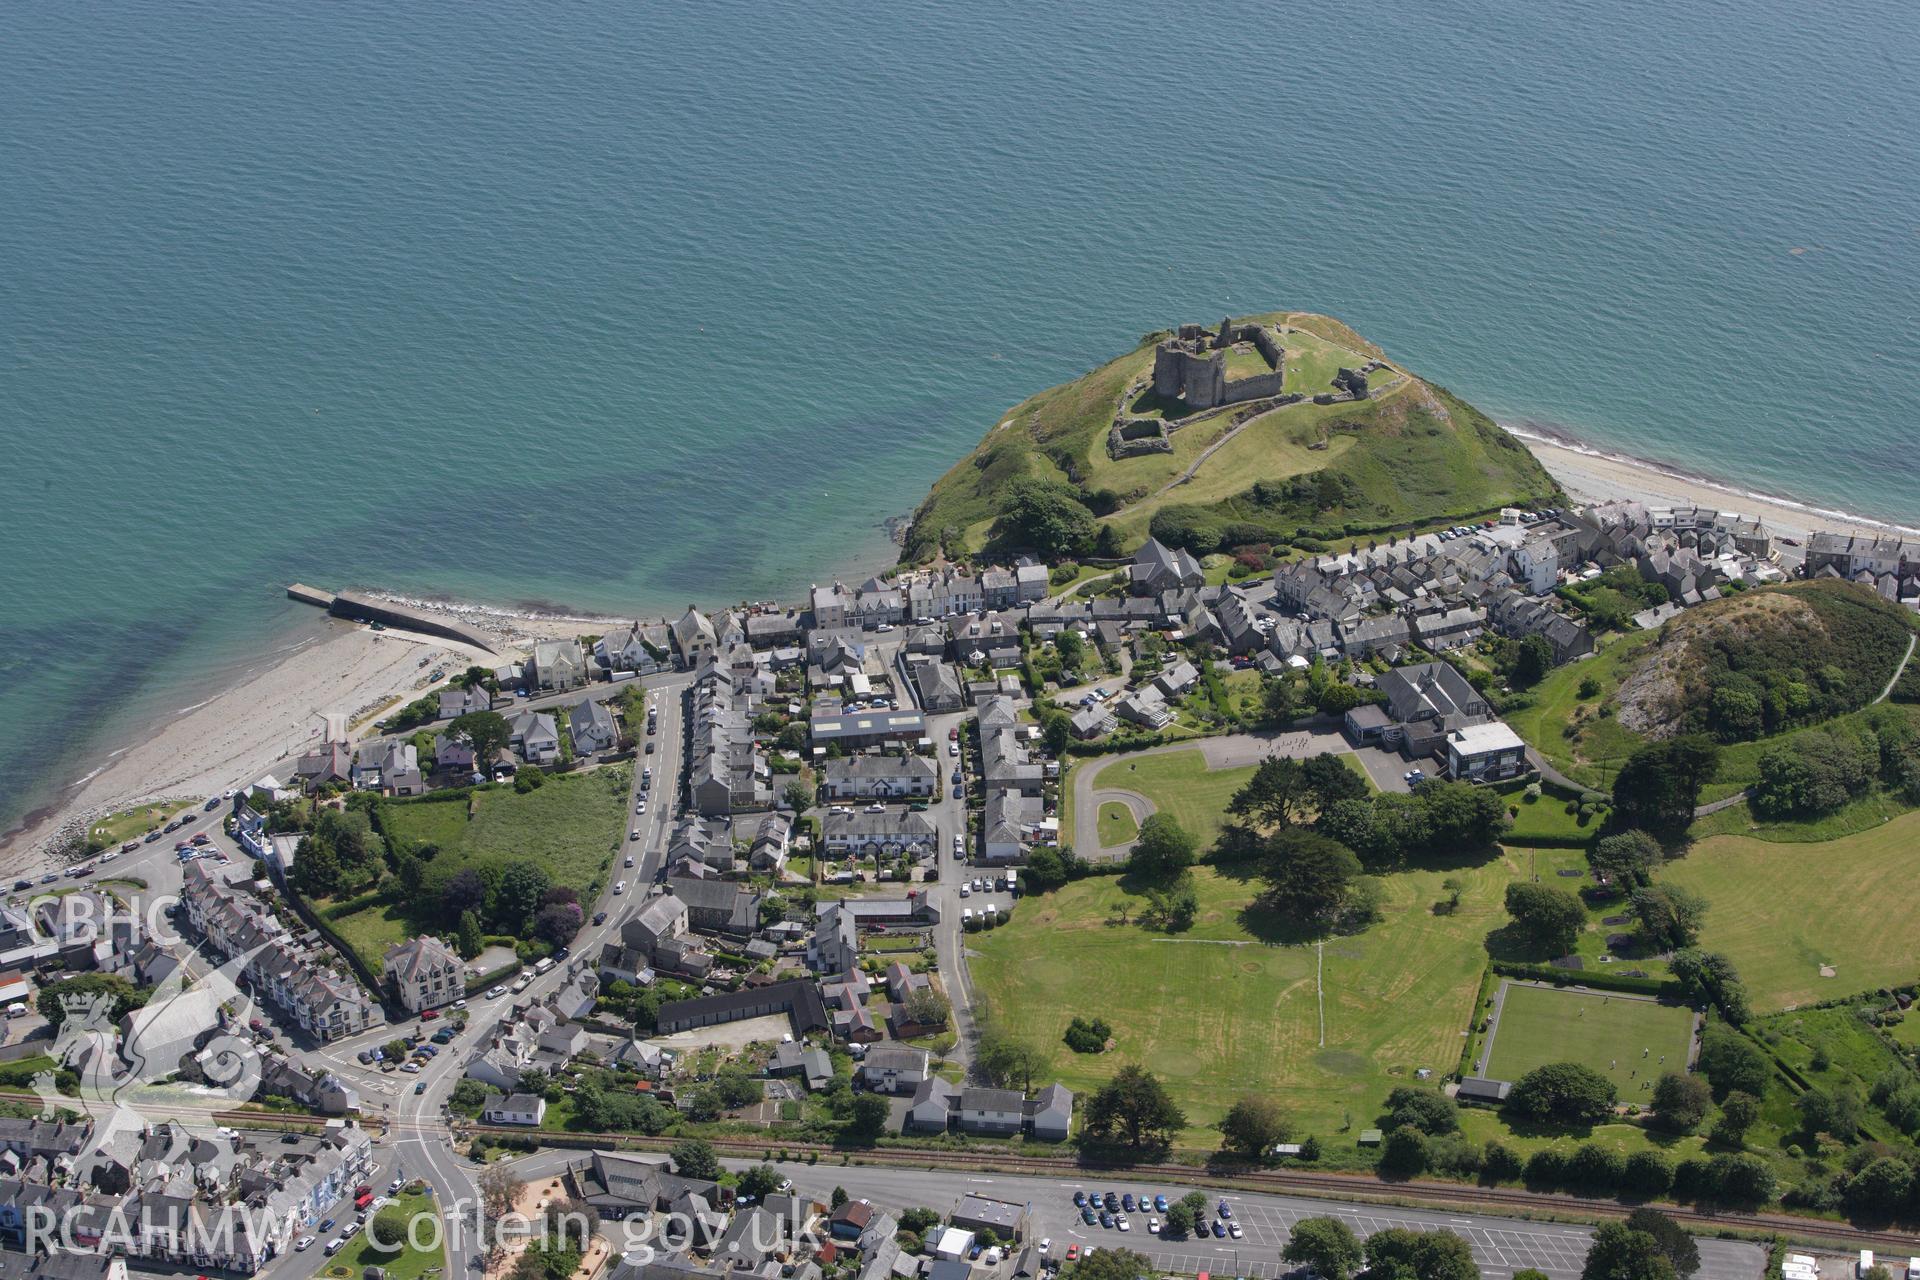 RCAHMW colour oblique aerial photograph of Criccieth Castle. Taken on 16 June 2009 by Toby Driver